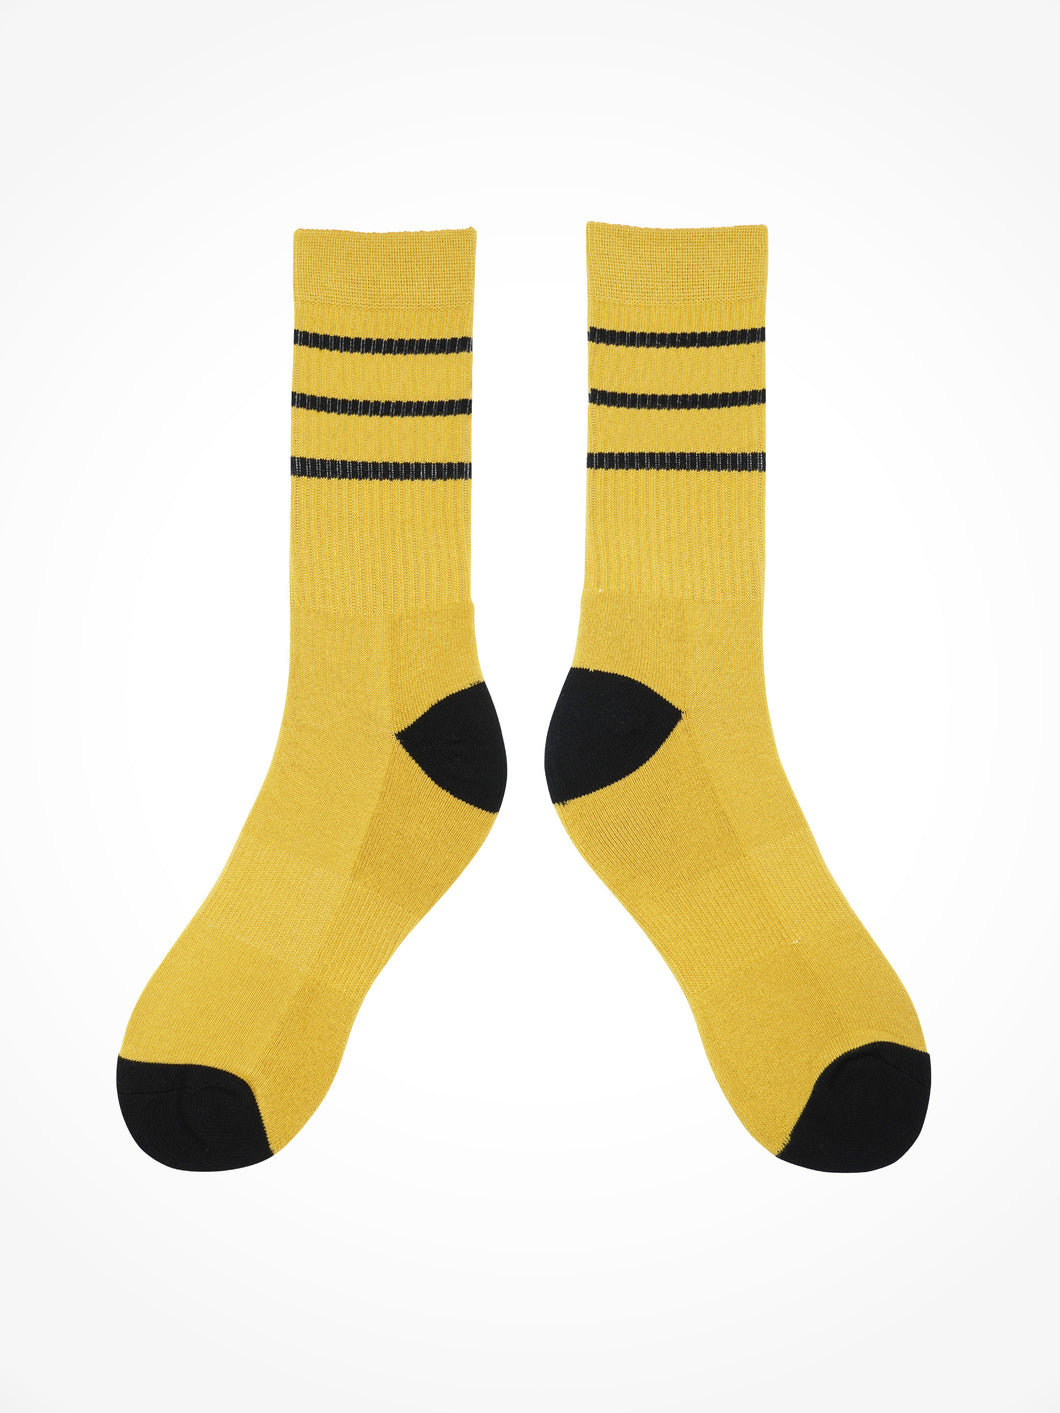 Yellow and Black Old School Socks